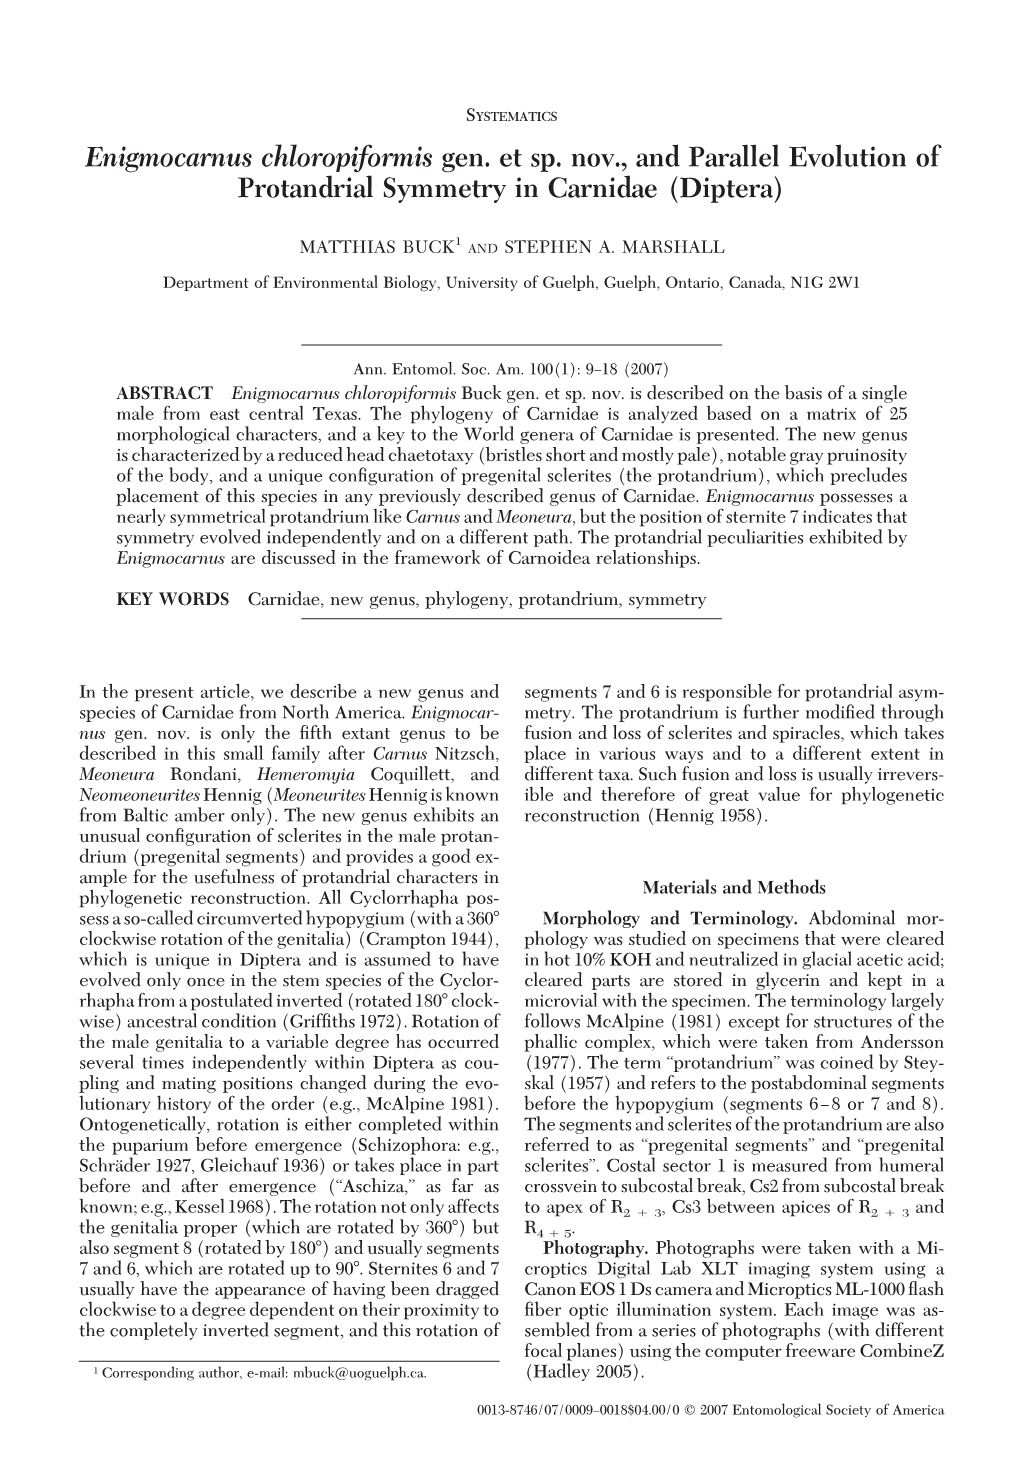 Enigmocarnus Chloropiformis Gen. Et Sp. Nov., and Parallel Evolution of Protandrial Symmetry in Carnidae (Diptera)